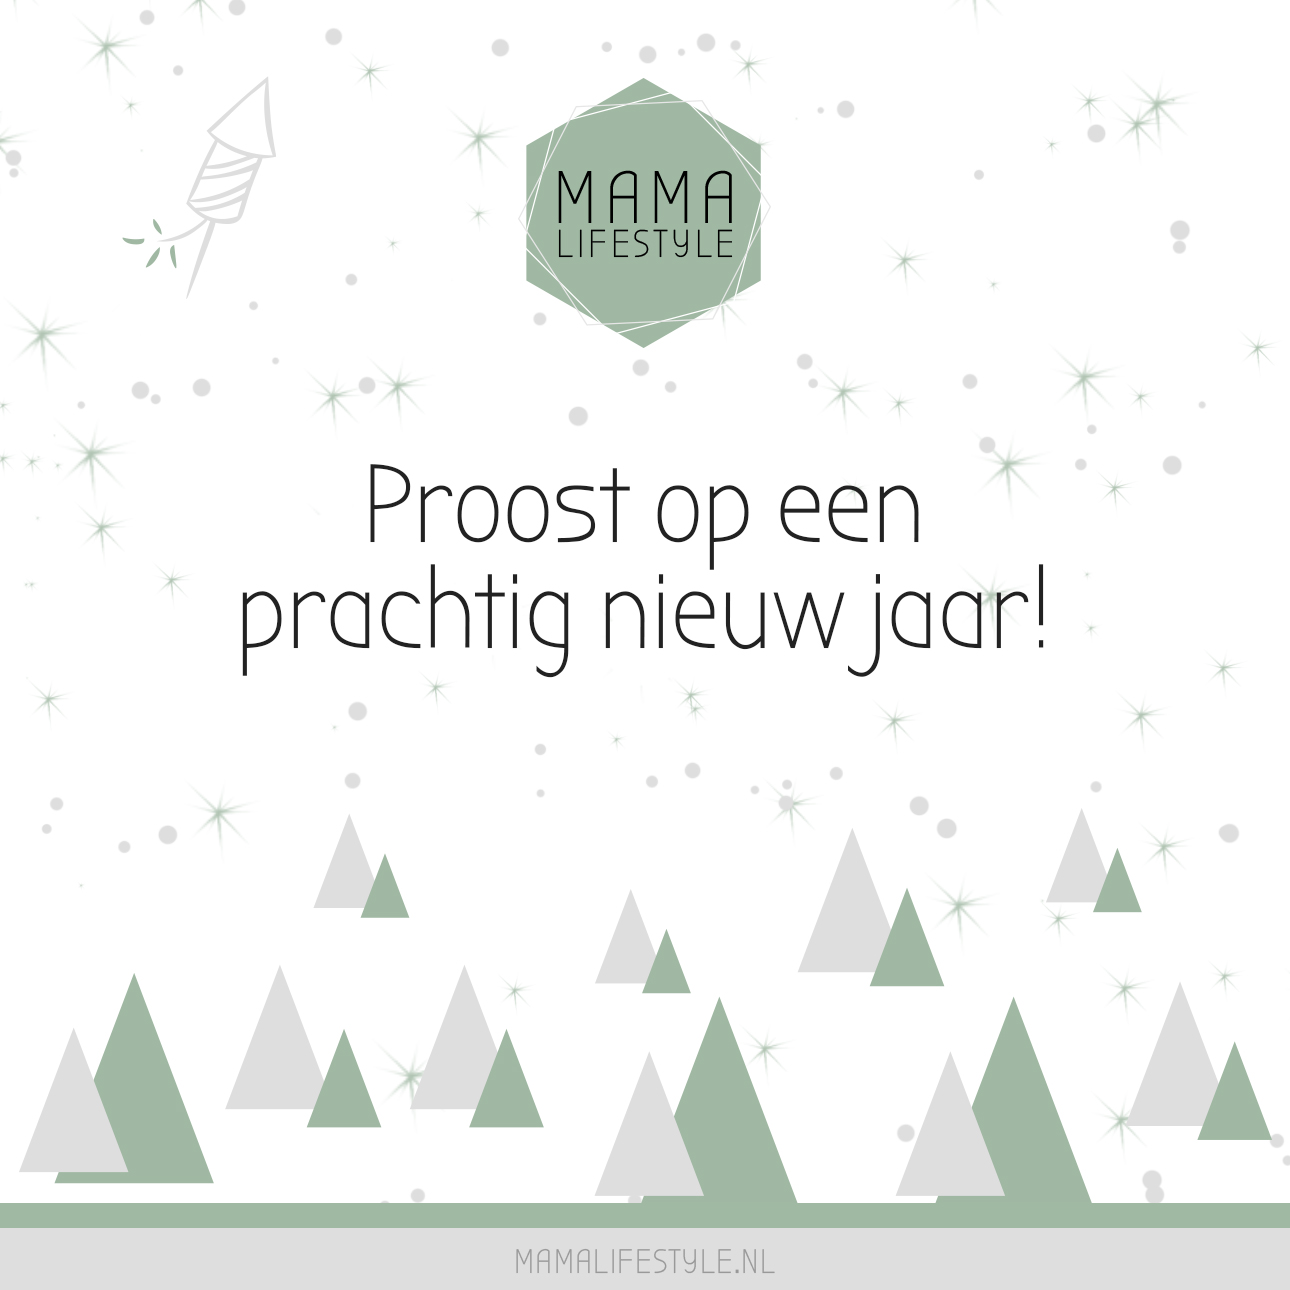 Mamalifestyle.nl nieuwjaarswens - gelukkig nieuwjaar mamalifestyle.nl